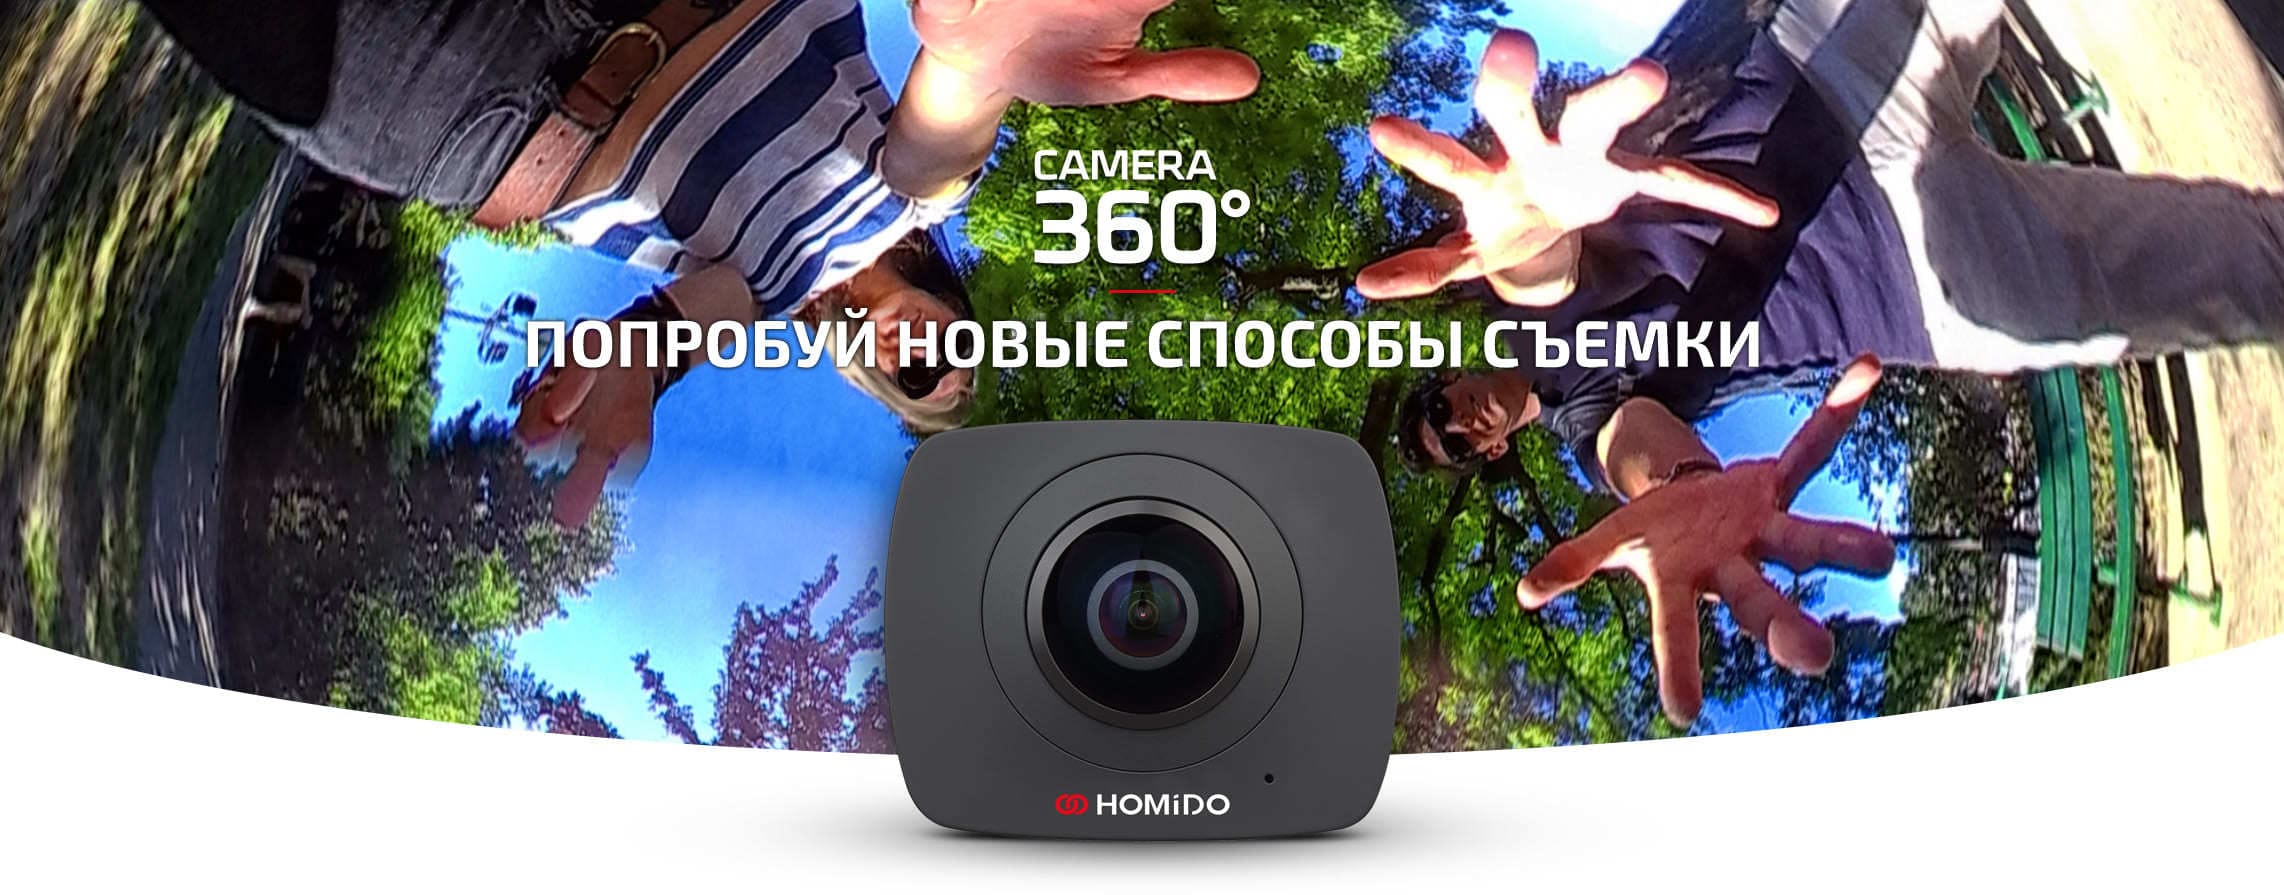 Камера Homido 360